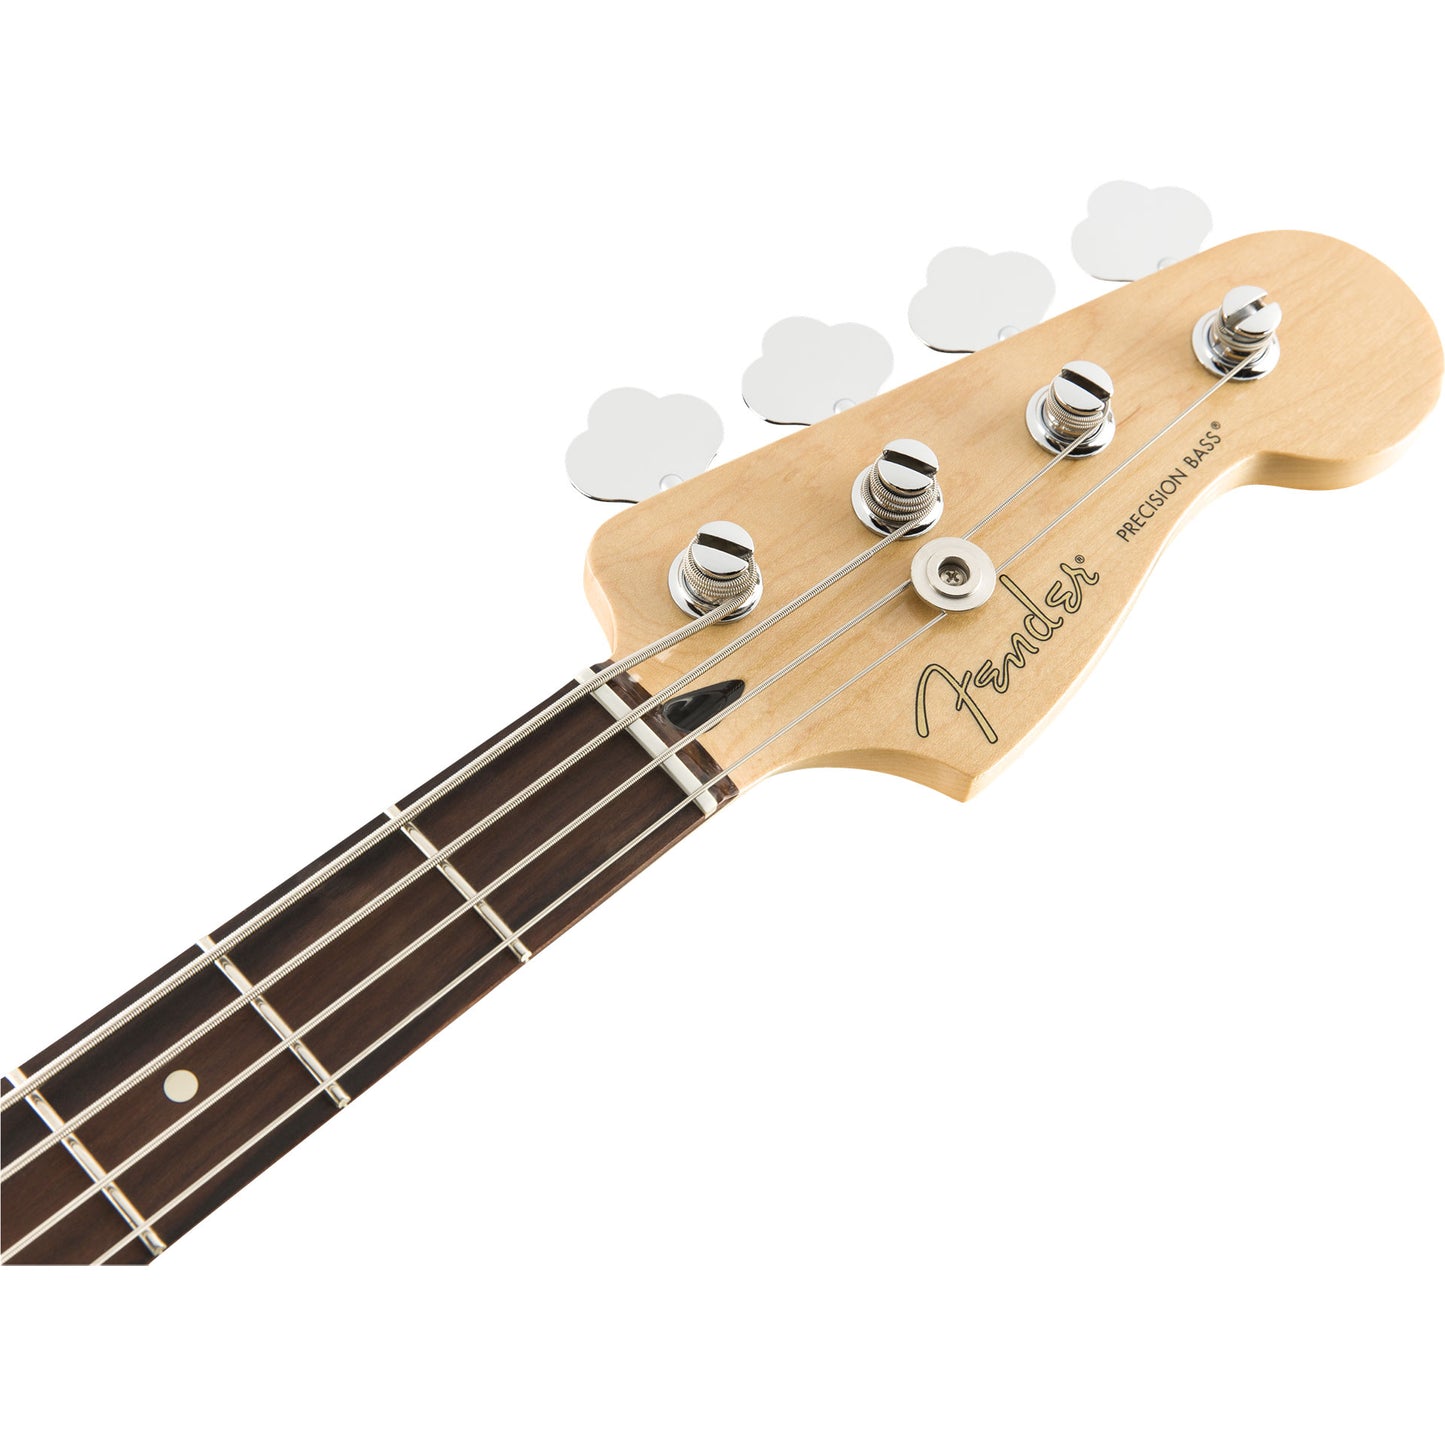 Fender Player Precision Electric Bass Guitar - Pau Ferro Fingerboard - Black